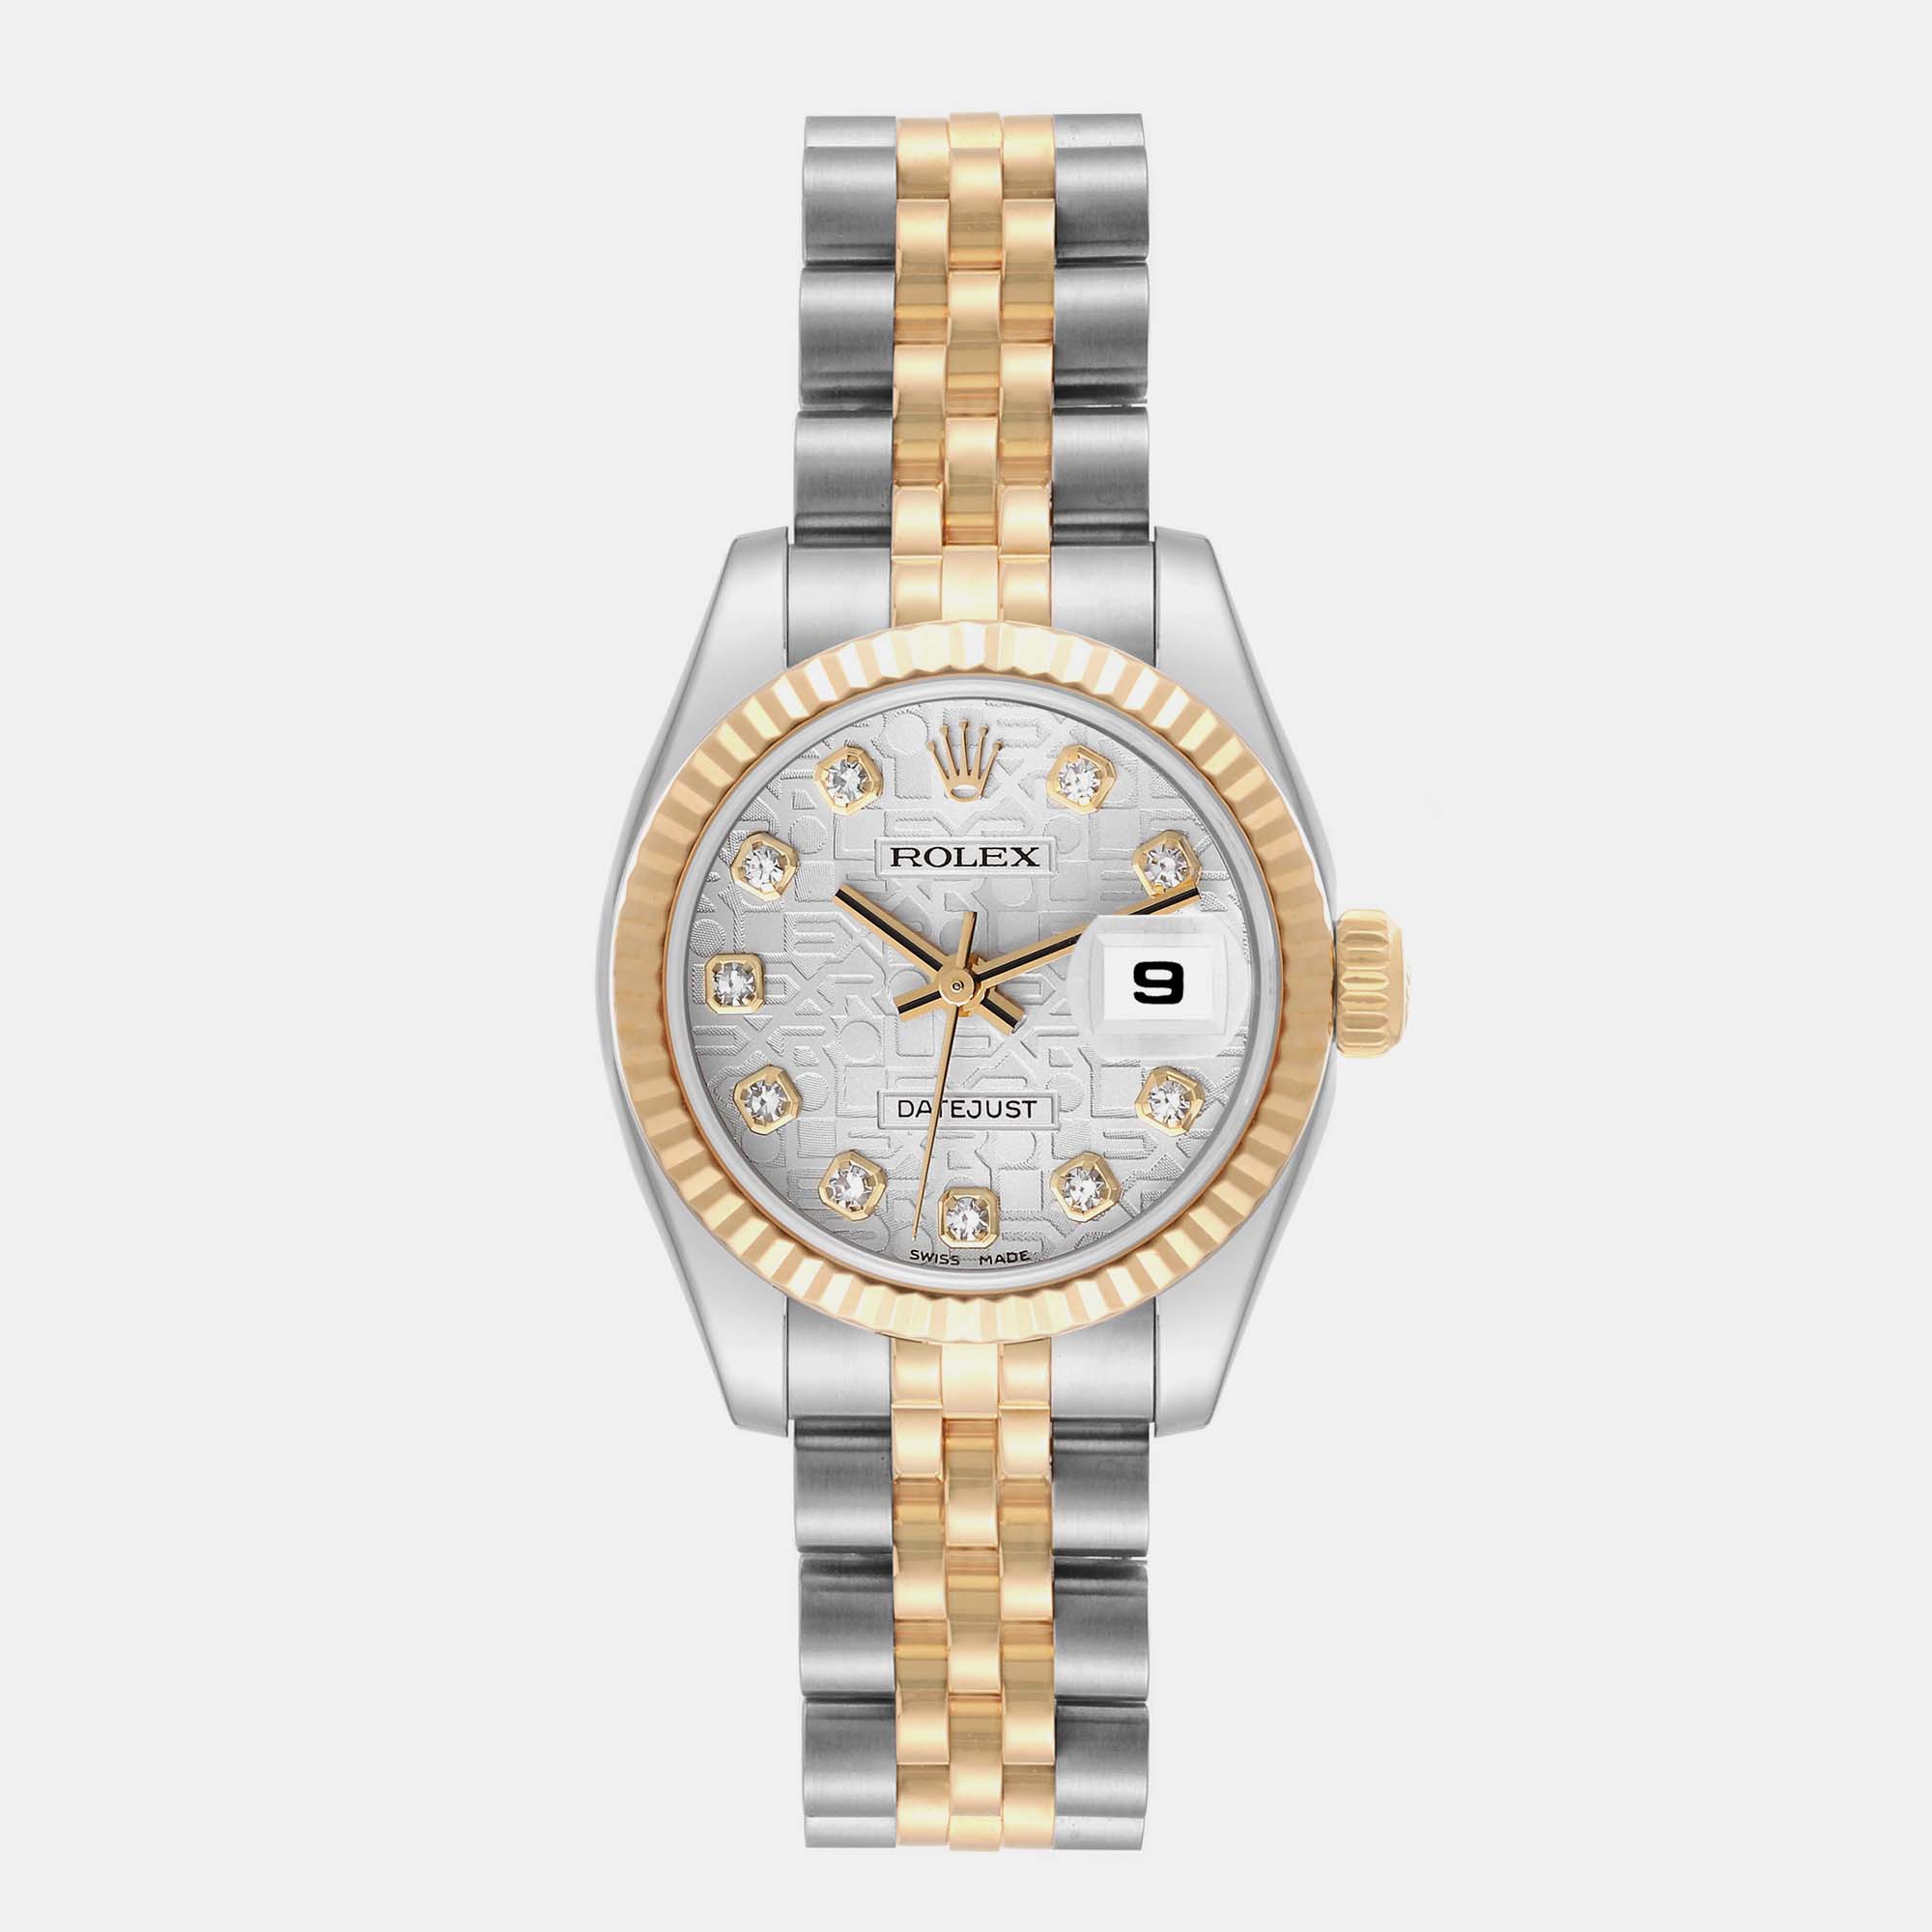 Rolex datejust steel yellow gold anniversary diamond dial ladies watch 179173